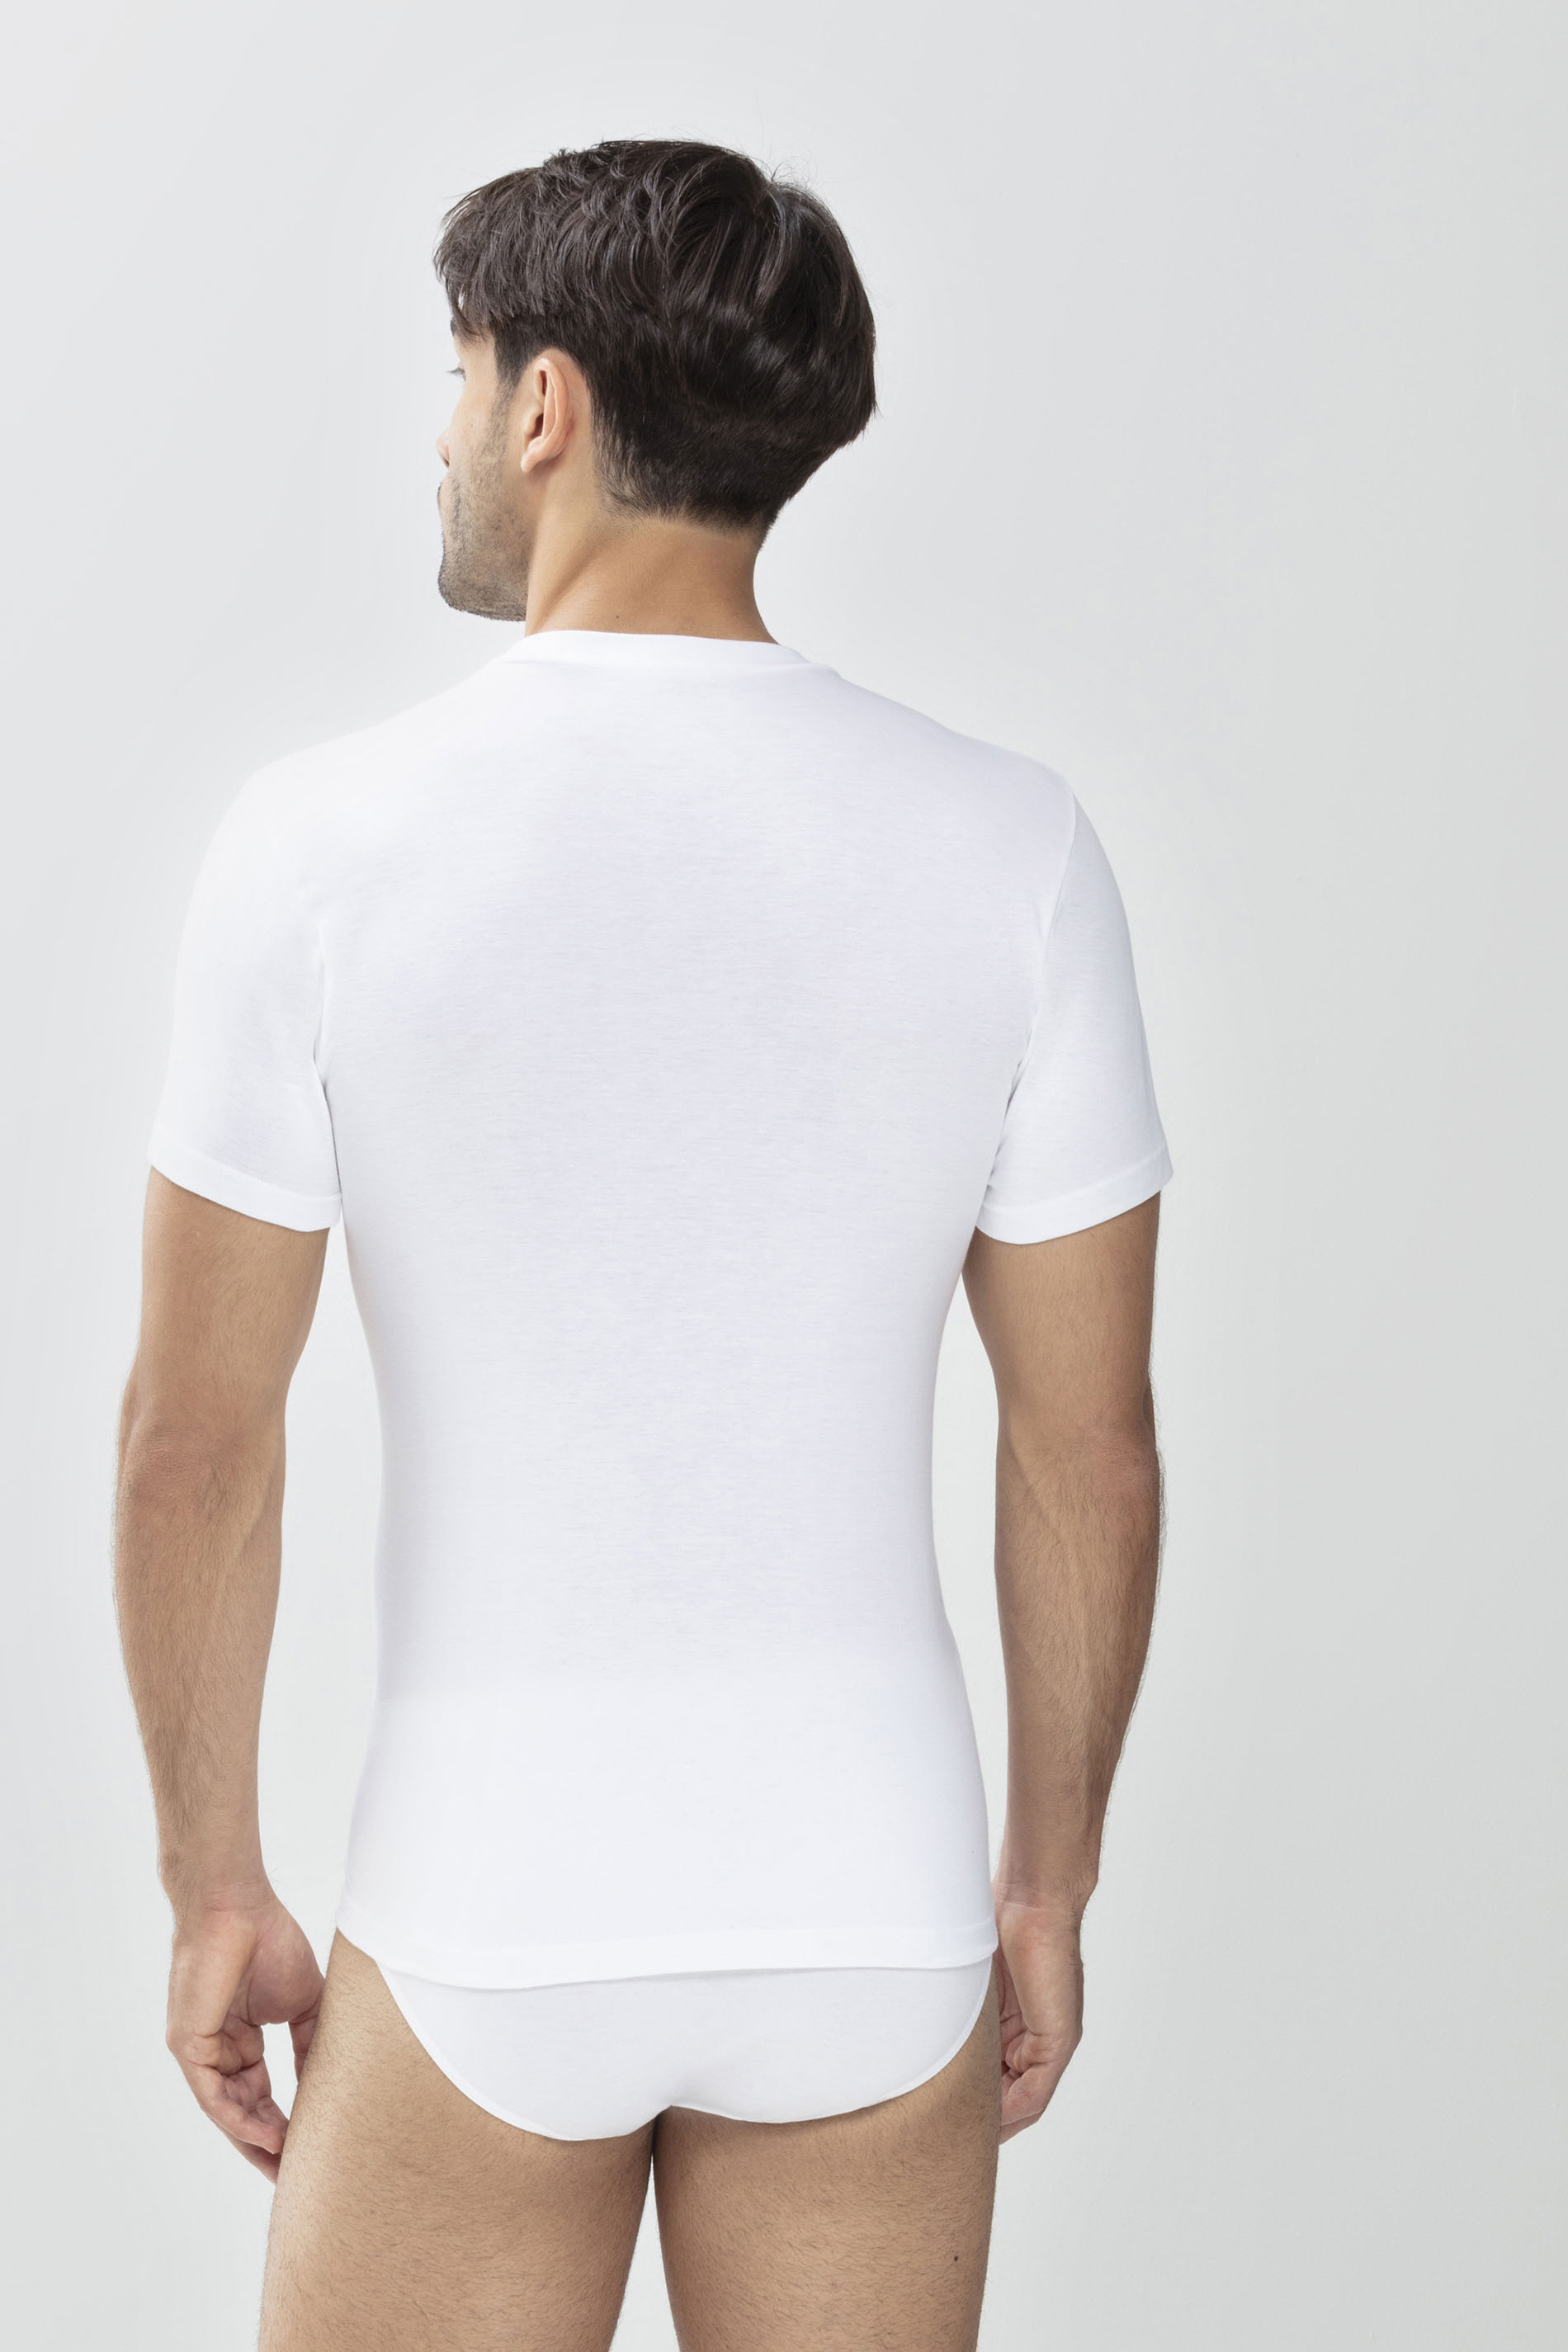 Olympia-Shirt Wit Serie Noblesse Achteraanzicht | mey®